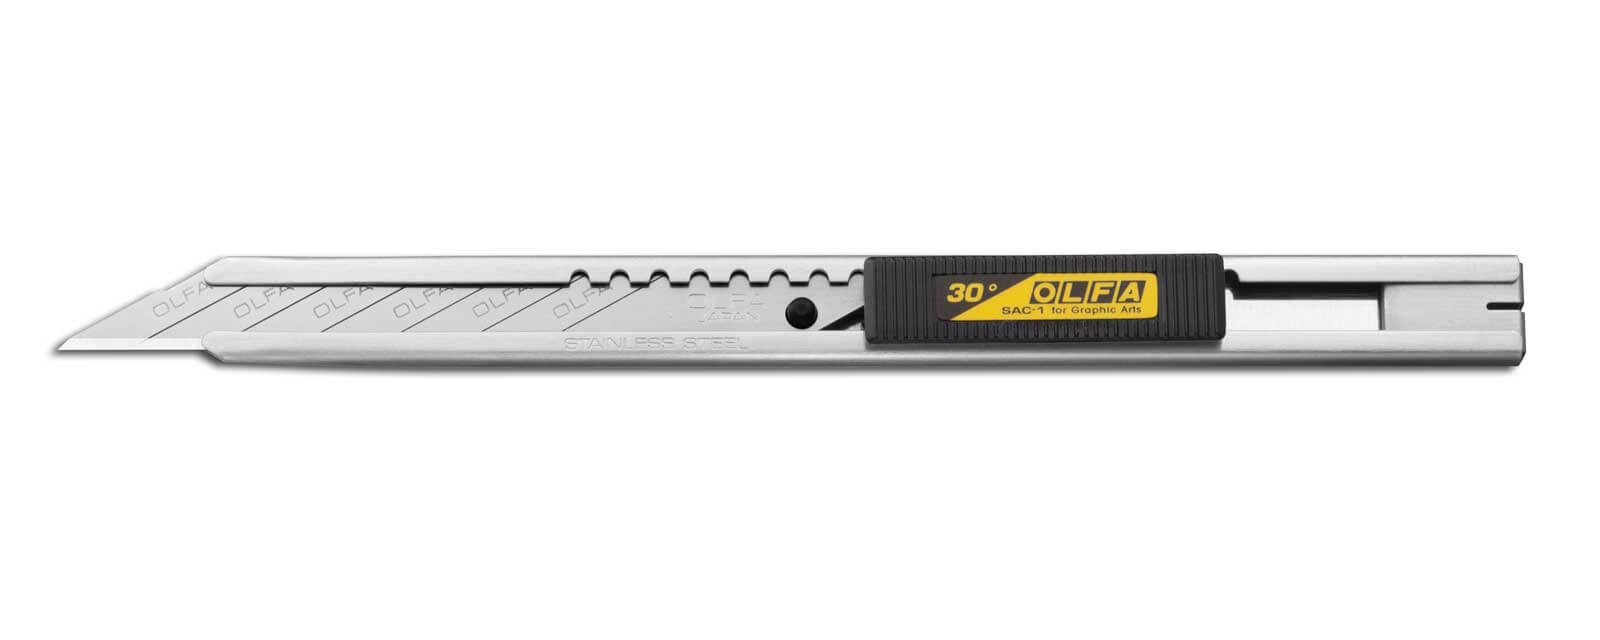 Cuttermesser OLFA SAC1 Edelstahl 9mm mit 30° Klinge